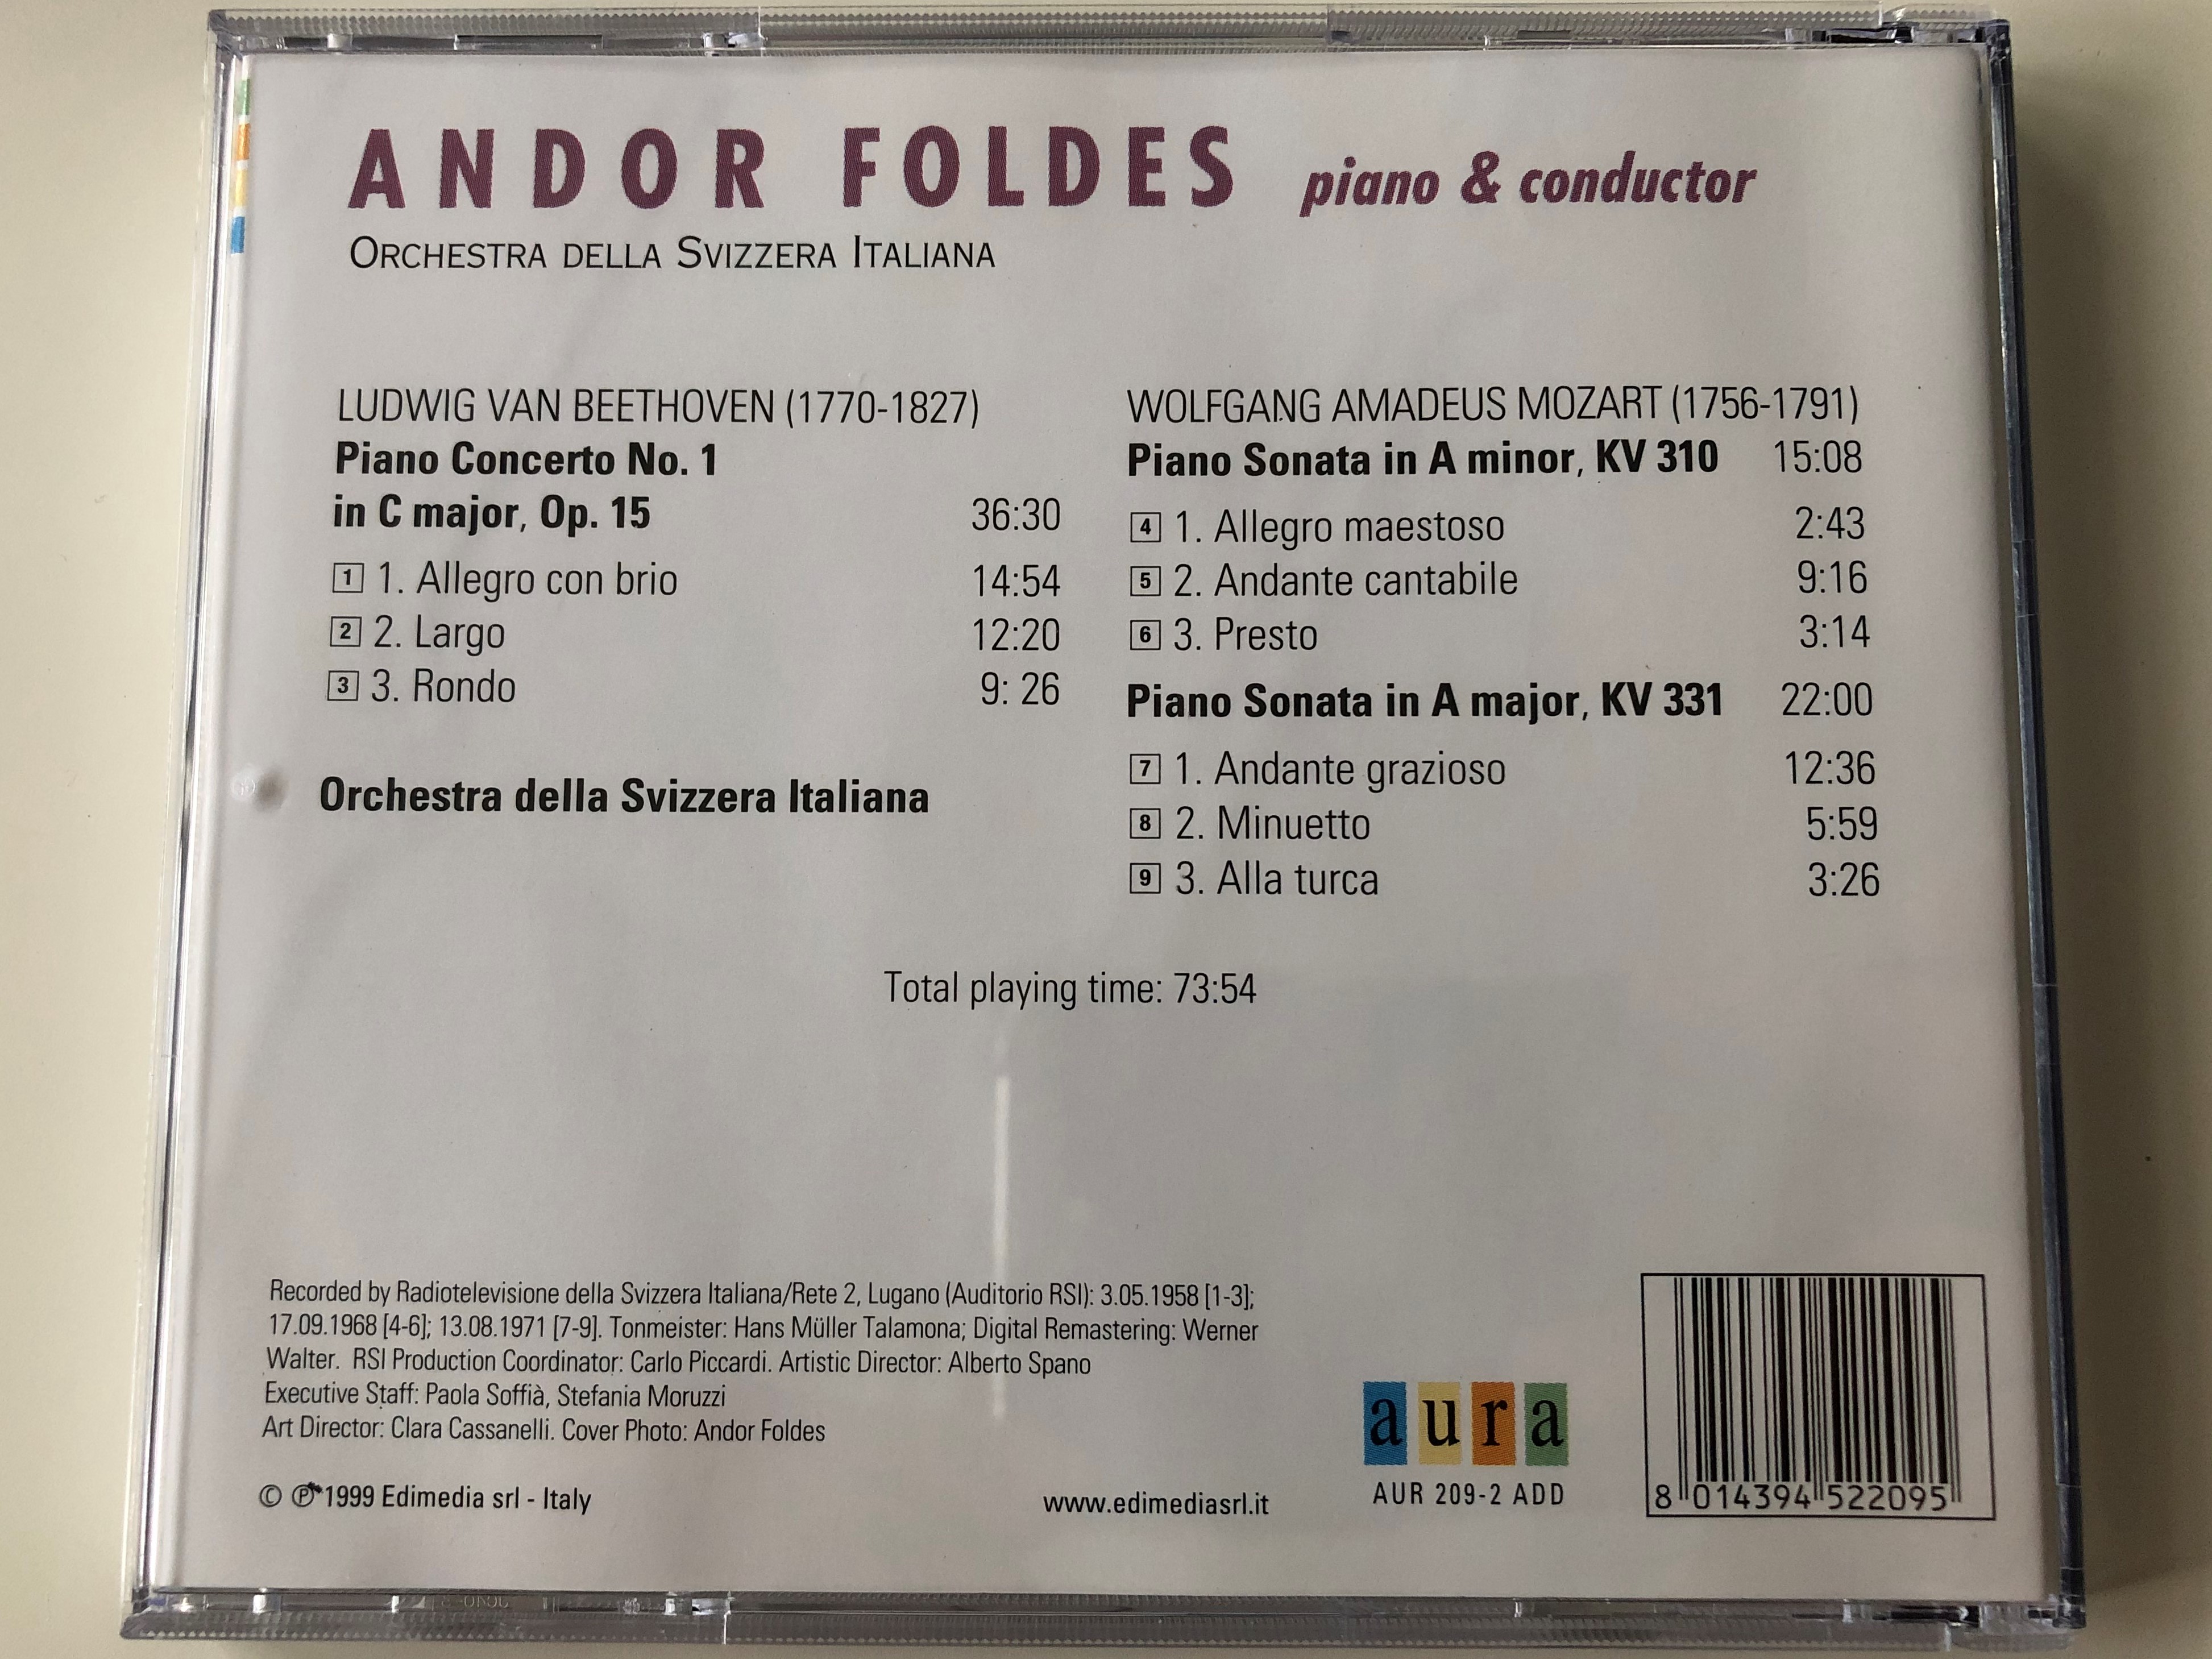 andor-foldes-piano-conductor-beethoven-piano-concerto-no.-1-op.-15-mozart-sonatas-kv-310-331-orchestra-della-svizzera-italiana-aura-music-audio-cd-1999-aur-209-2-add-5-.jpg